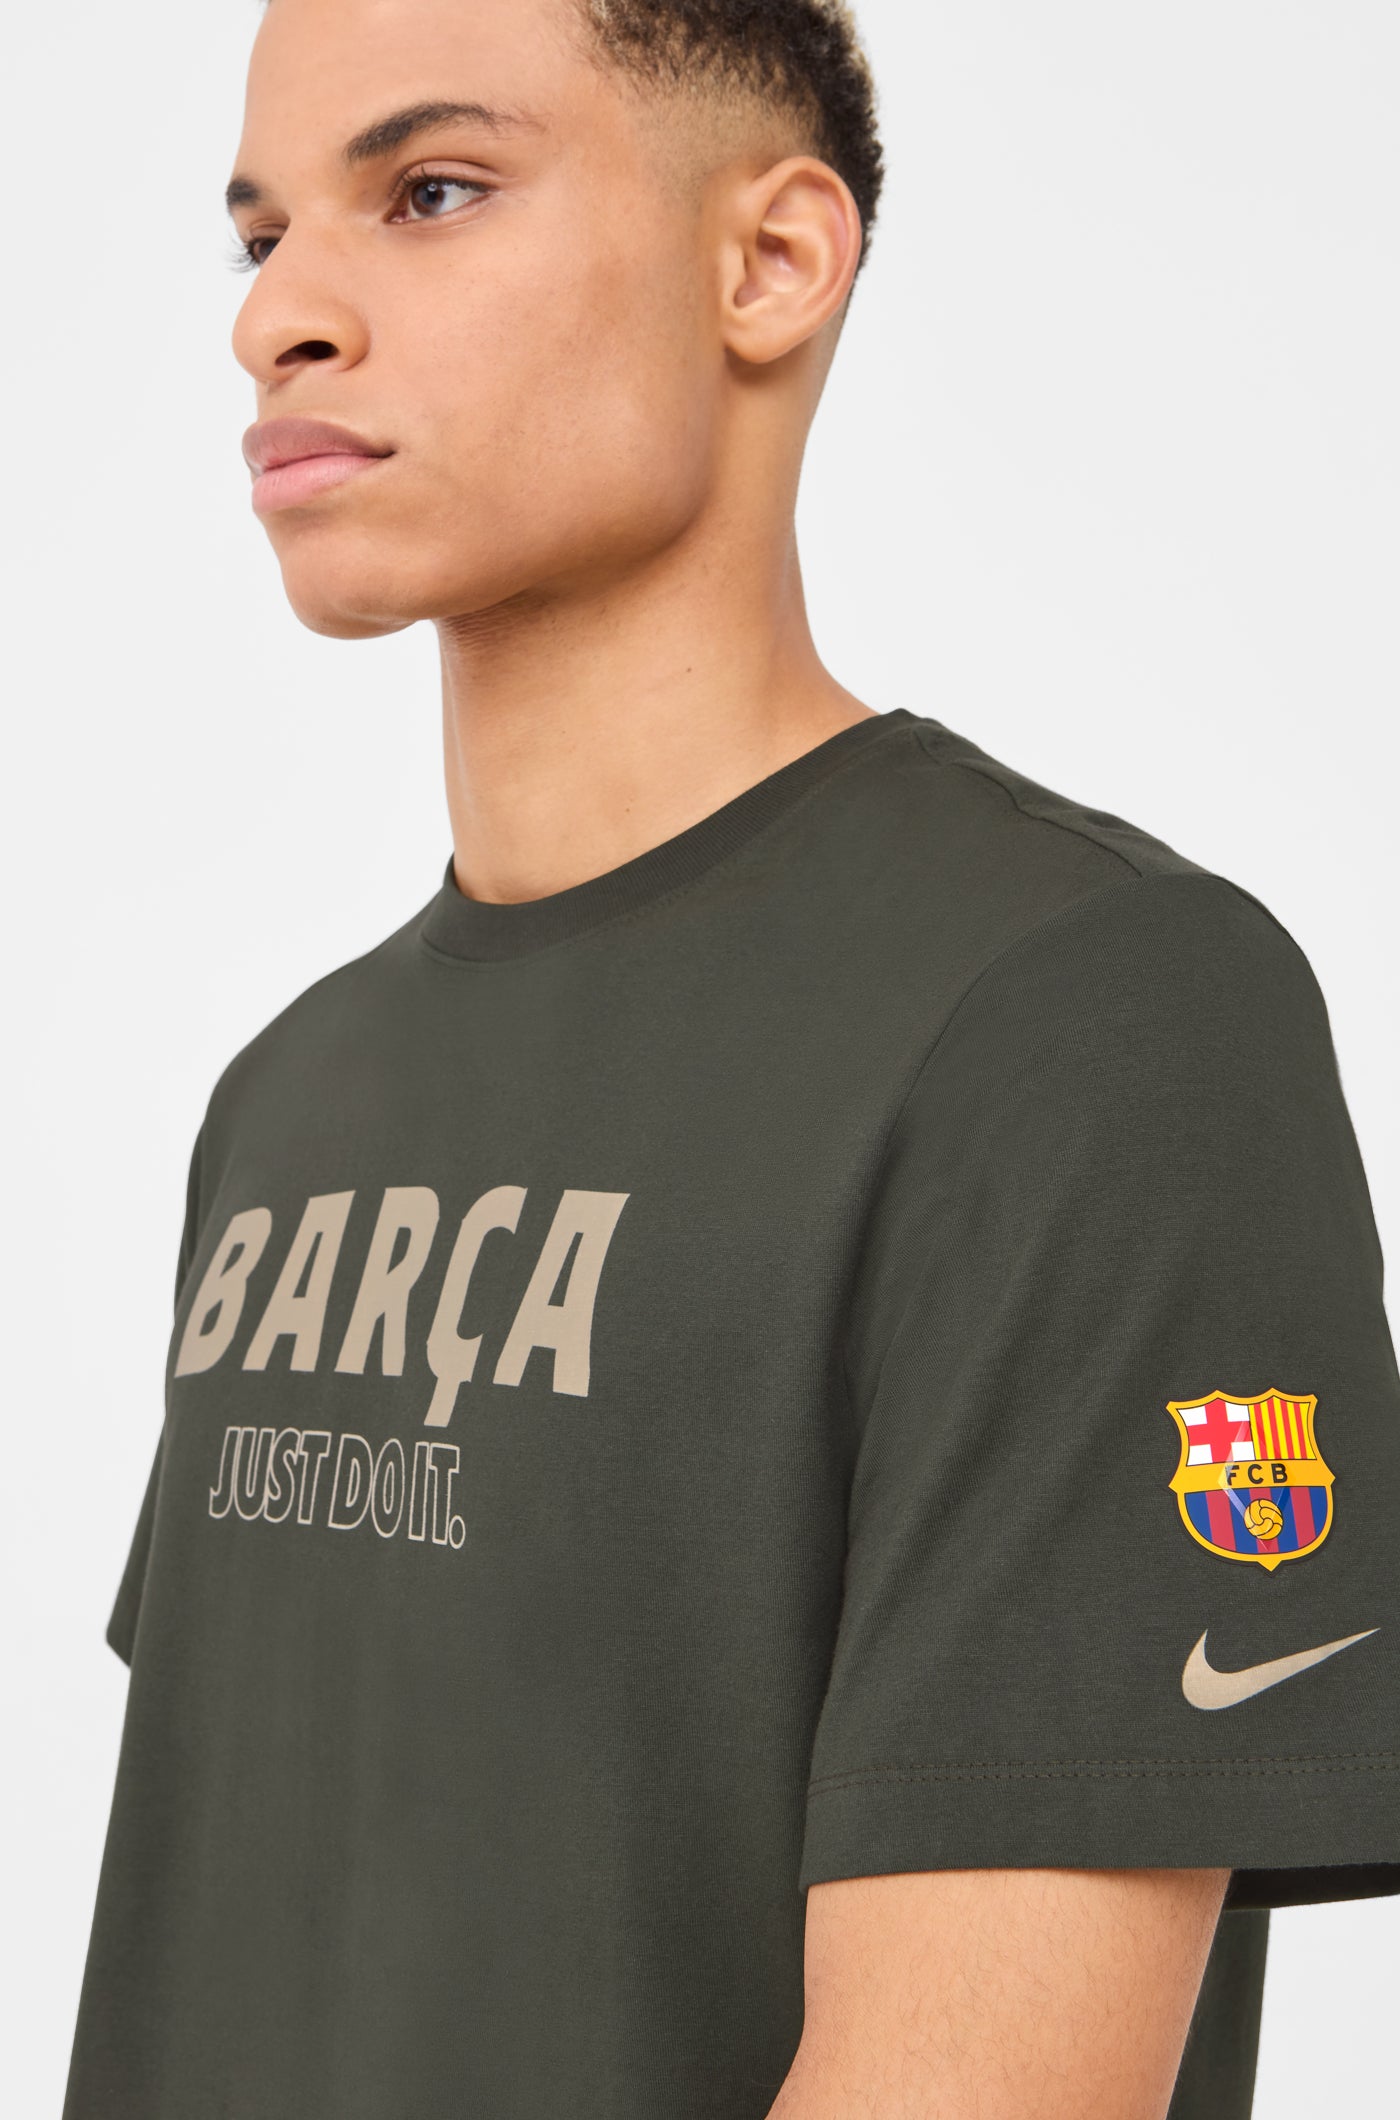 Camiseta verde Barça Nike